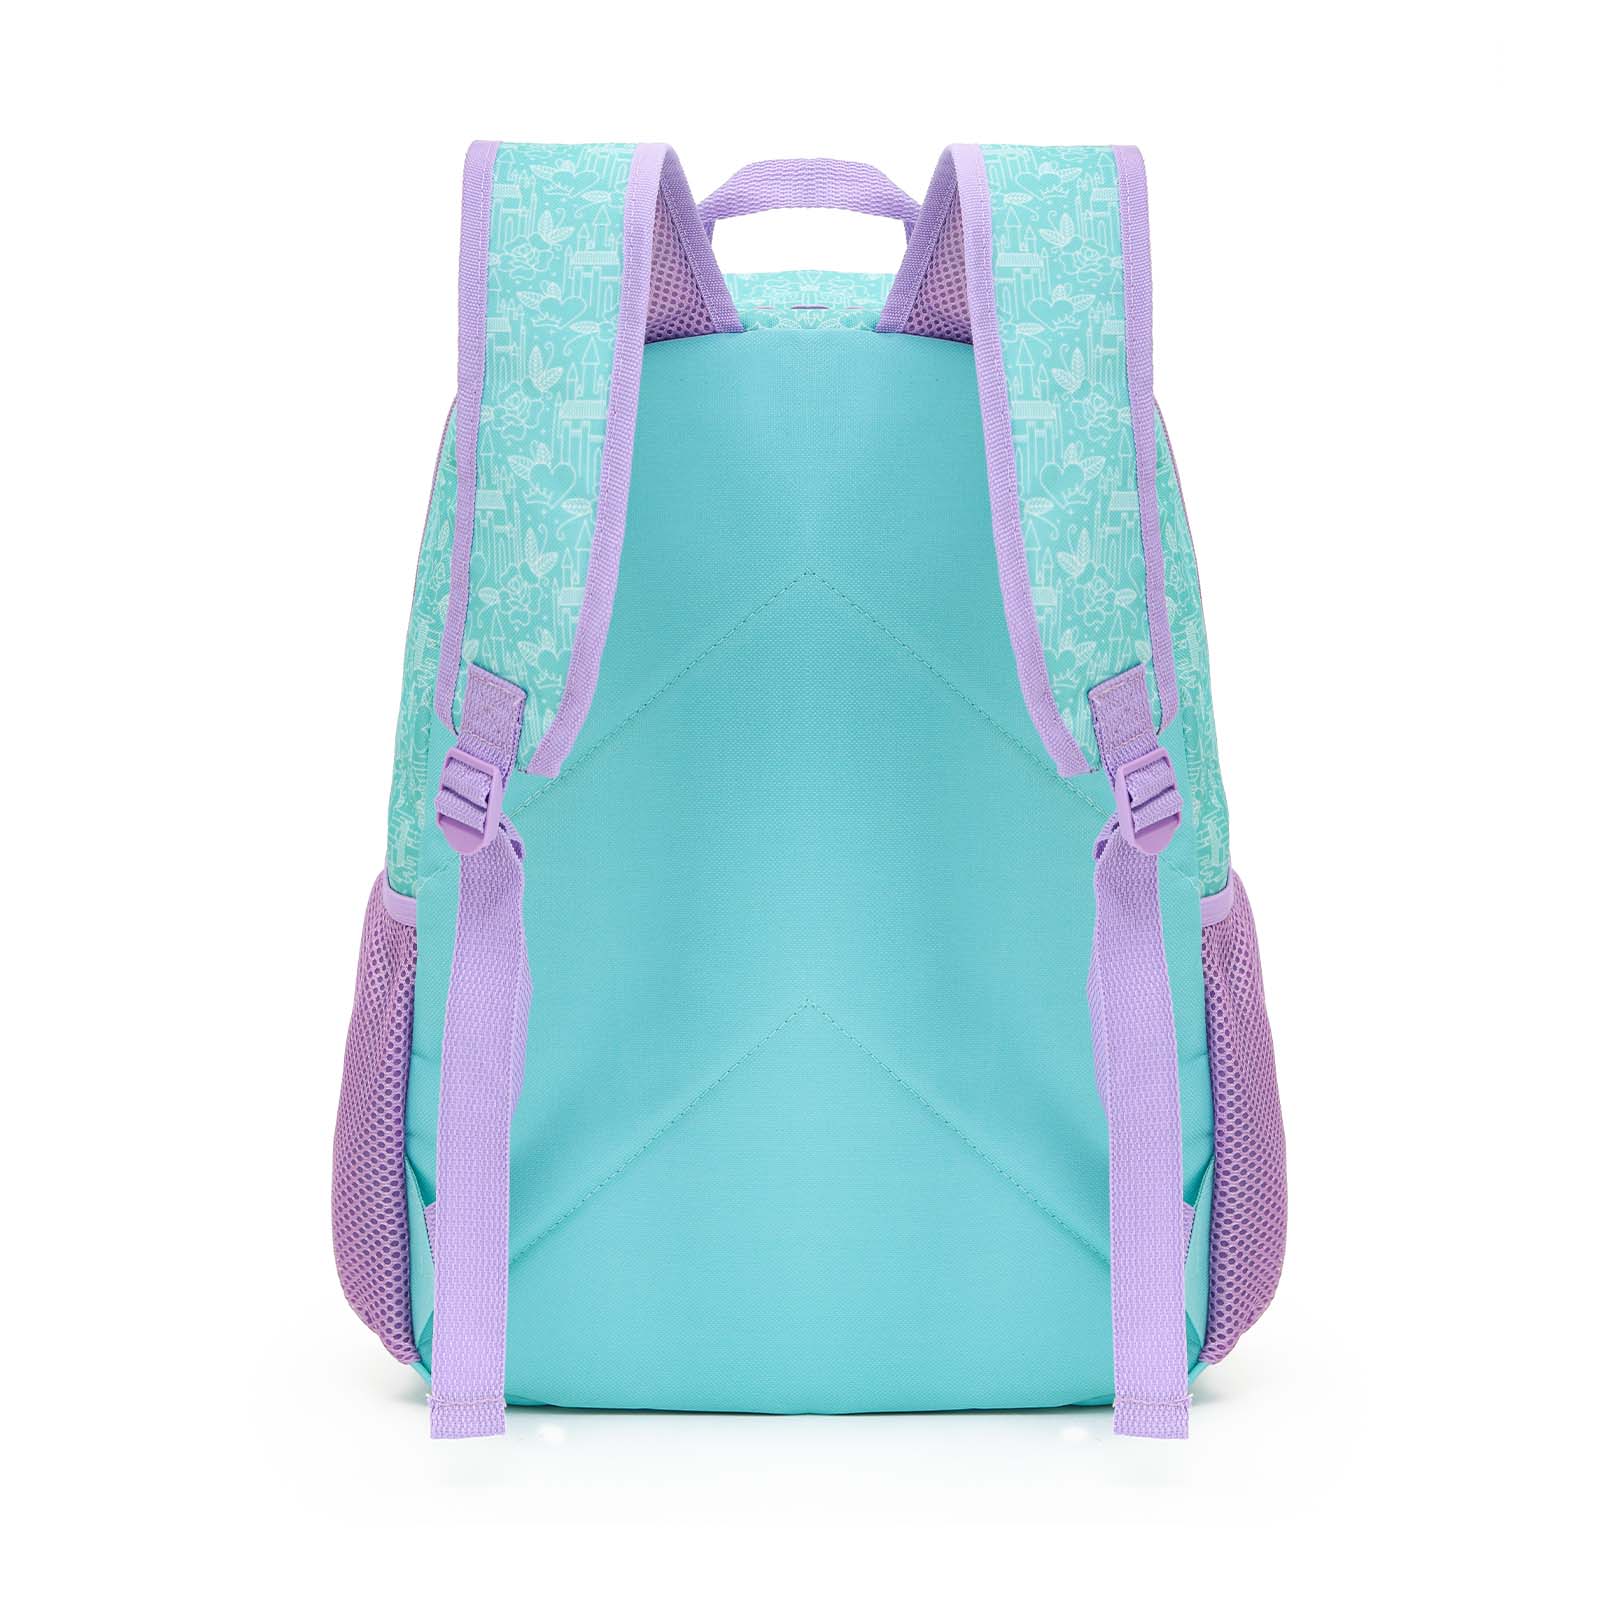    disney-princess-16inch-backpack-back.jpg